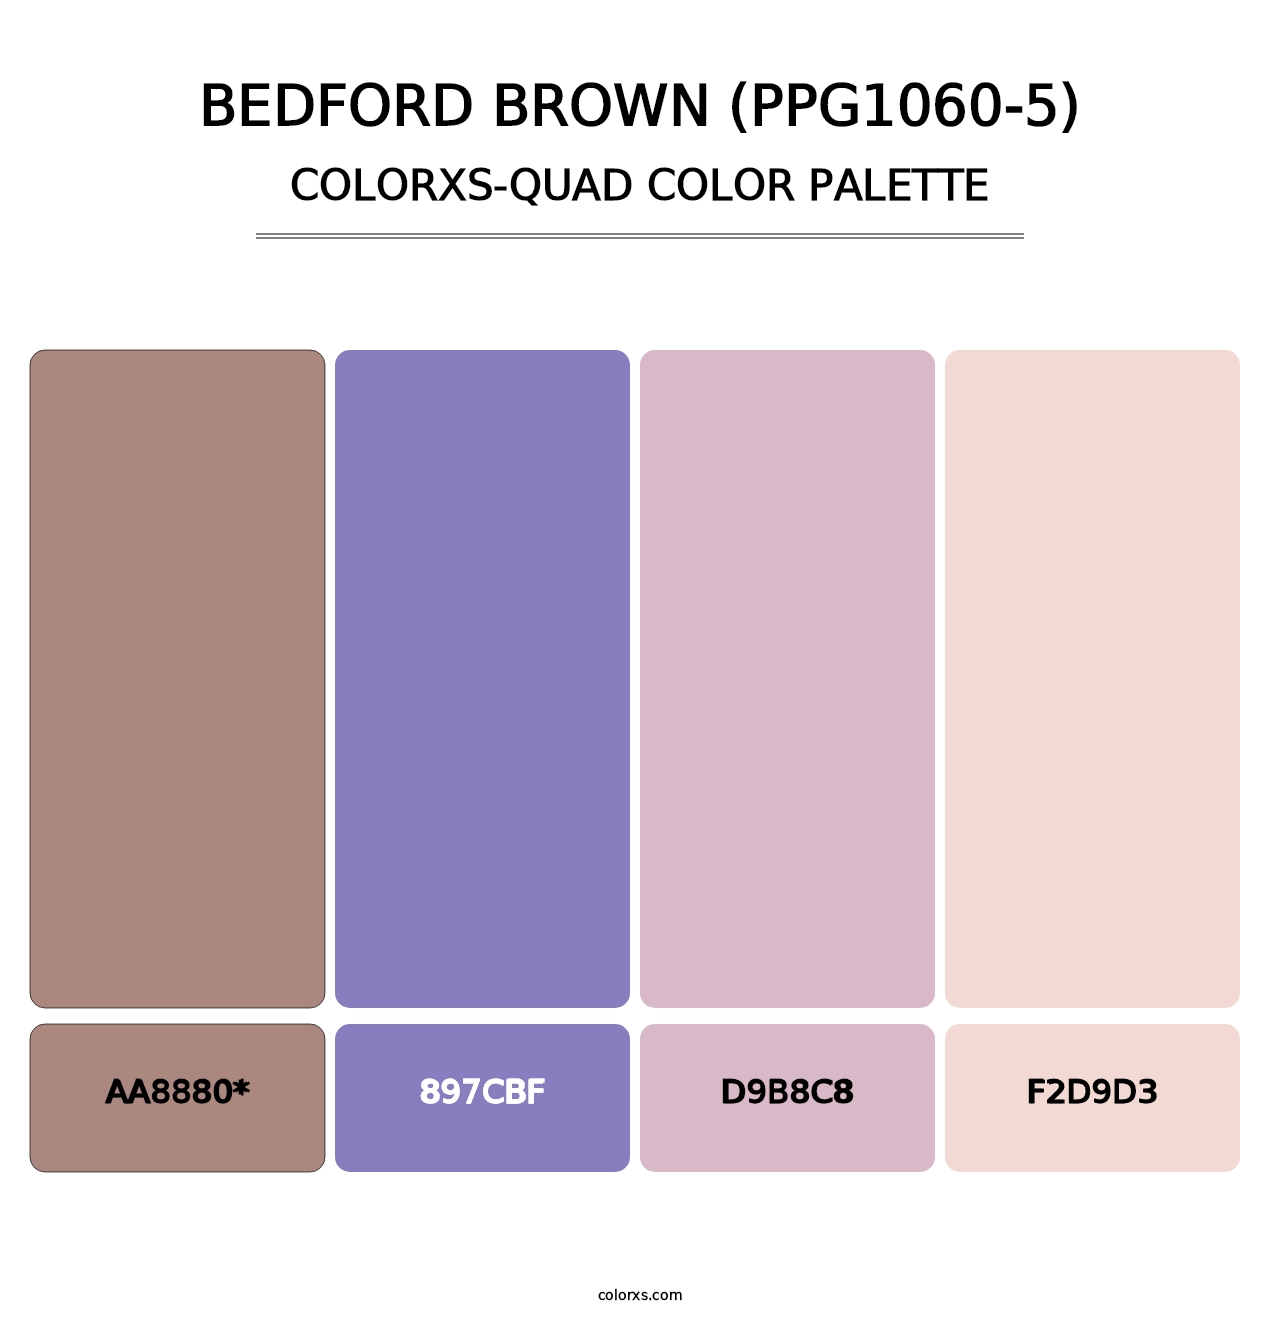 Bedford Brown (PPG1060-5) - Colorxs Quad Palette